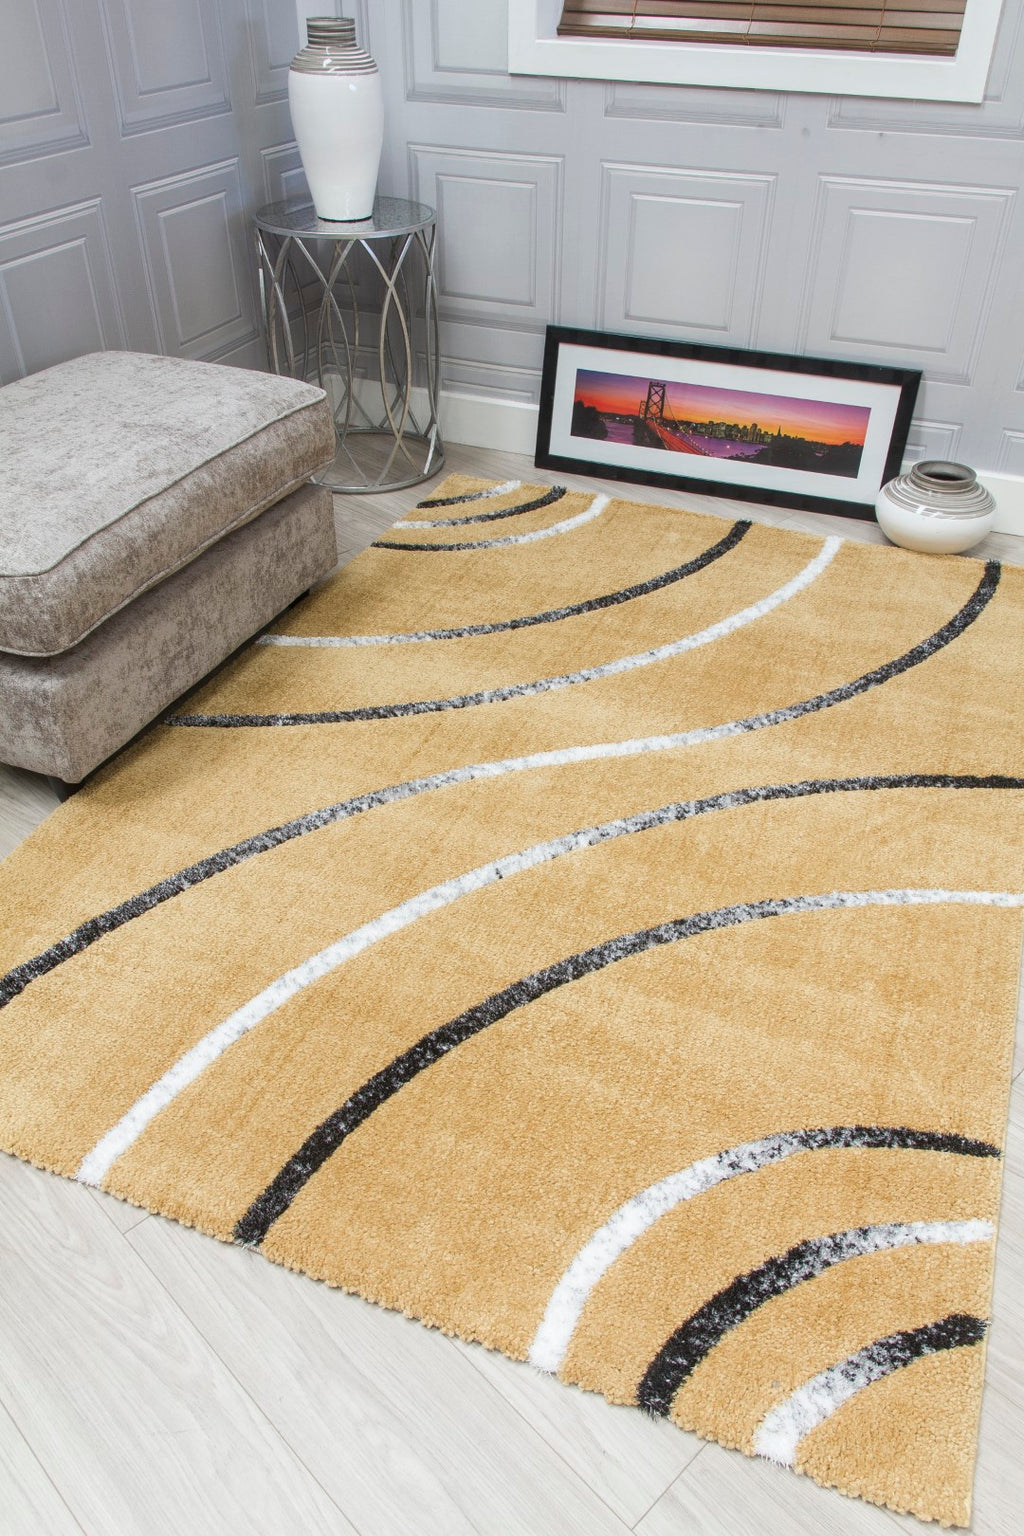 Radiance Ochre Gorgeous modern ochre geometric rug.